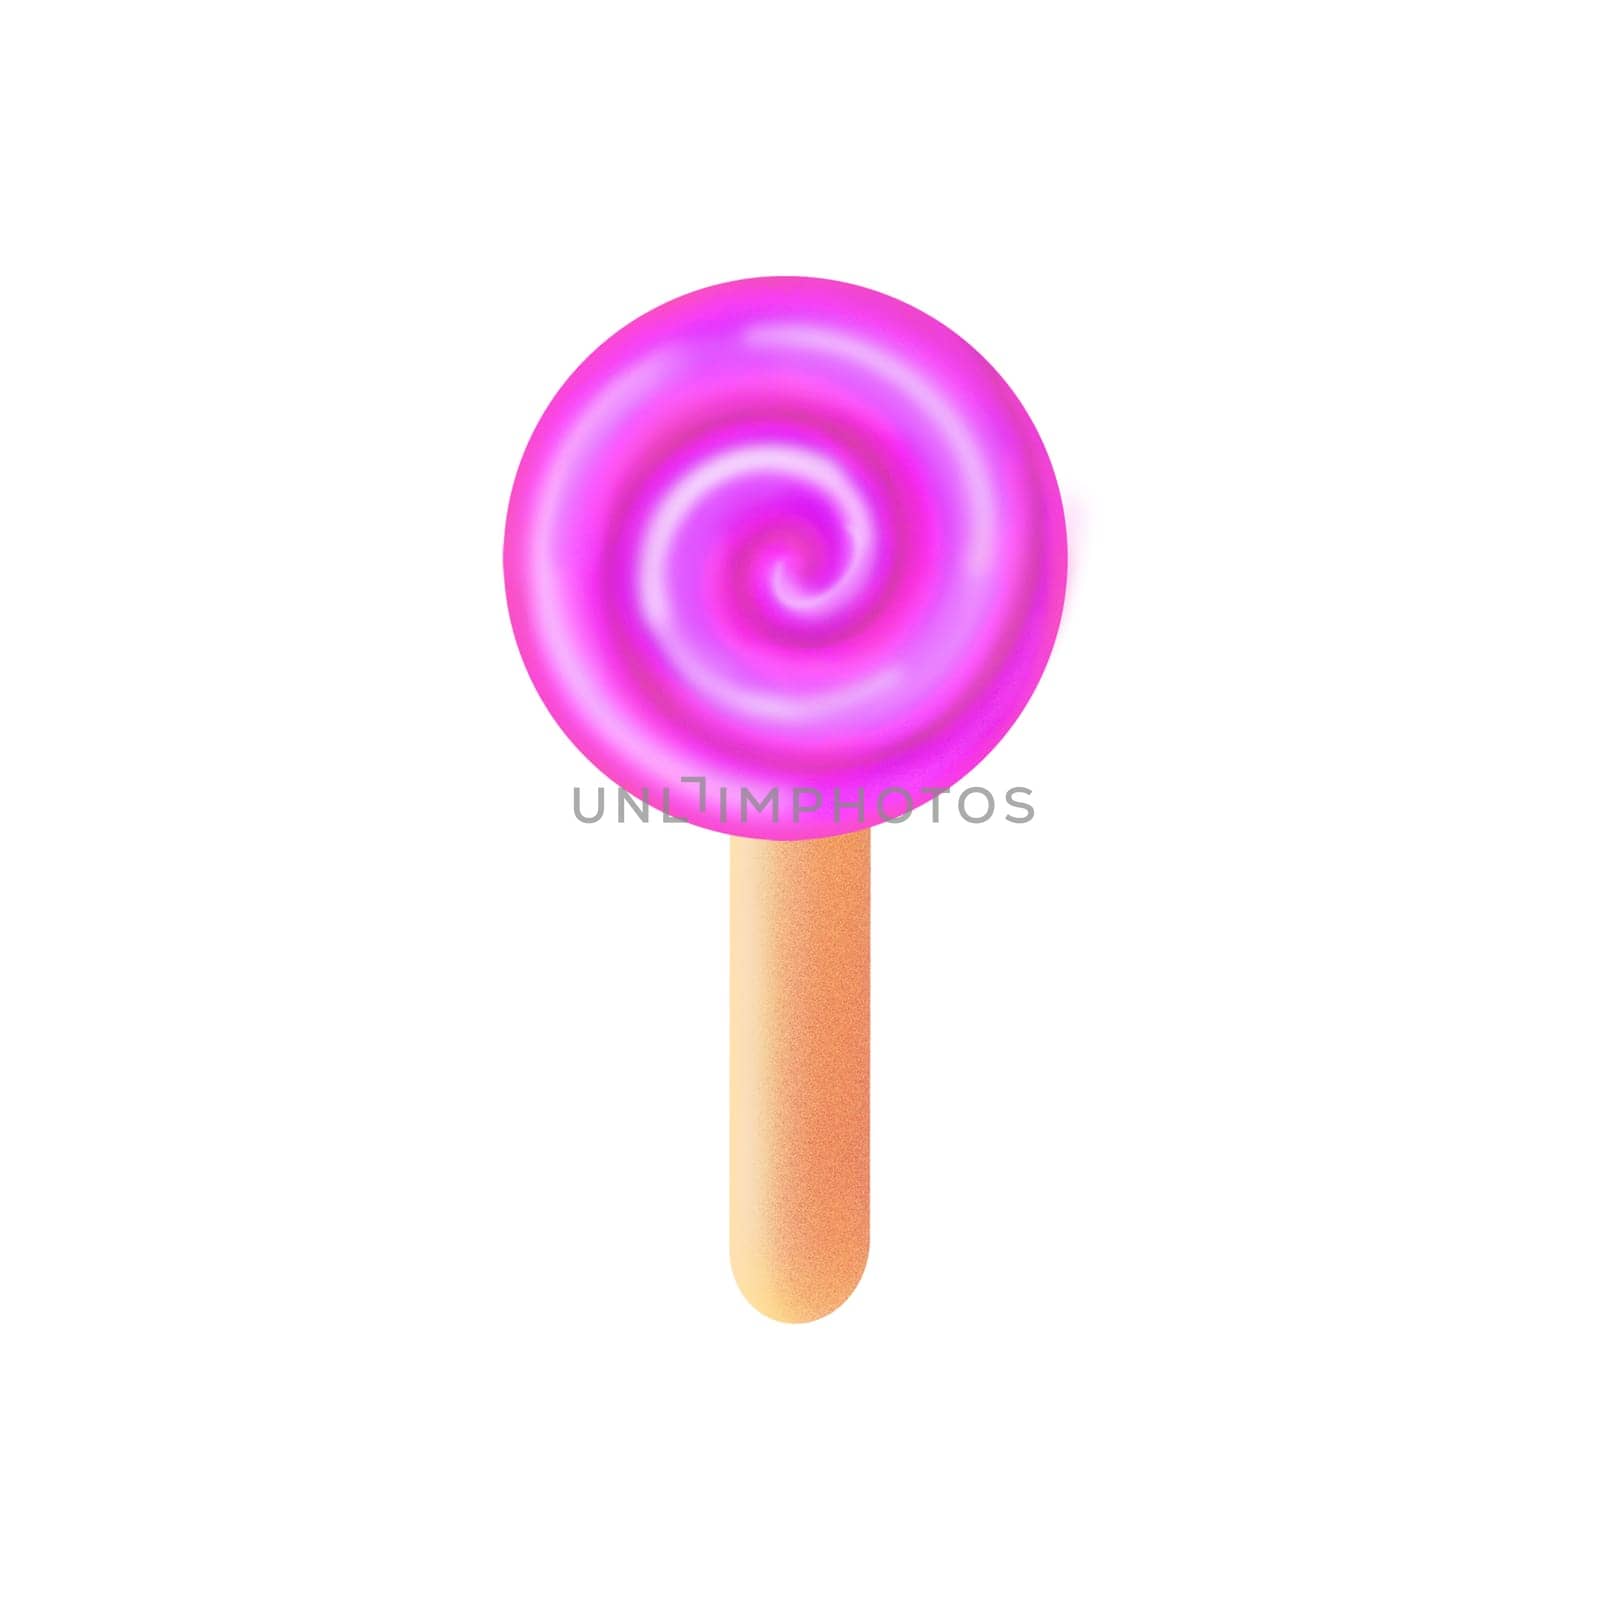 illustration of minimalist style round pink candy on stick isolated on white background